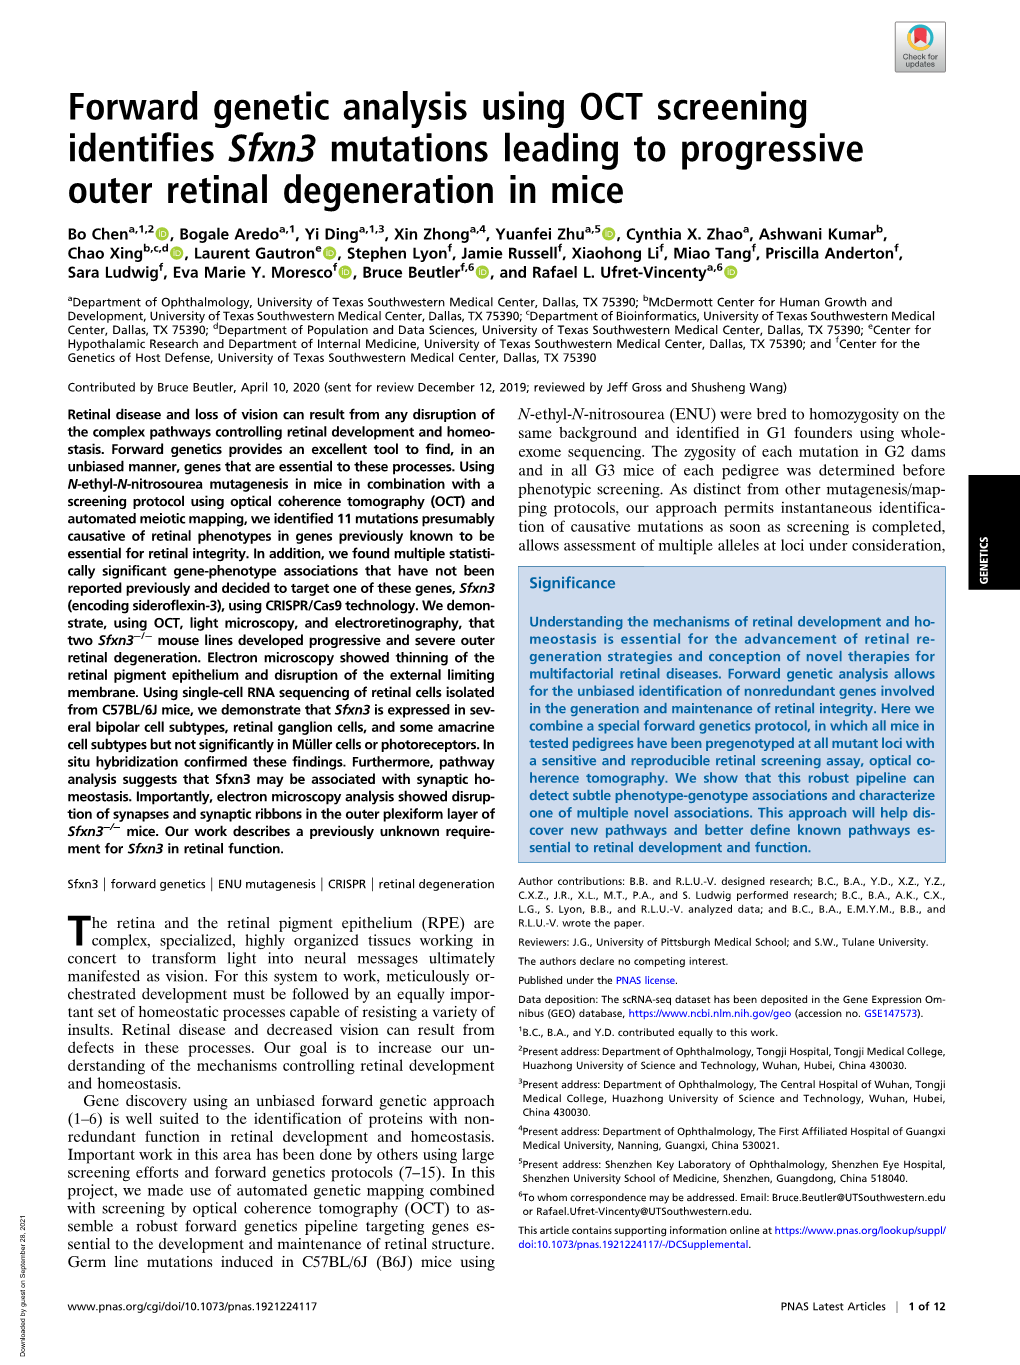 Forward Genetic Analysis Using OCT Screening Identifies Sfxn3 Mutations Leading to Progressive Outer Retinal Degeneration in Mice